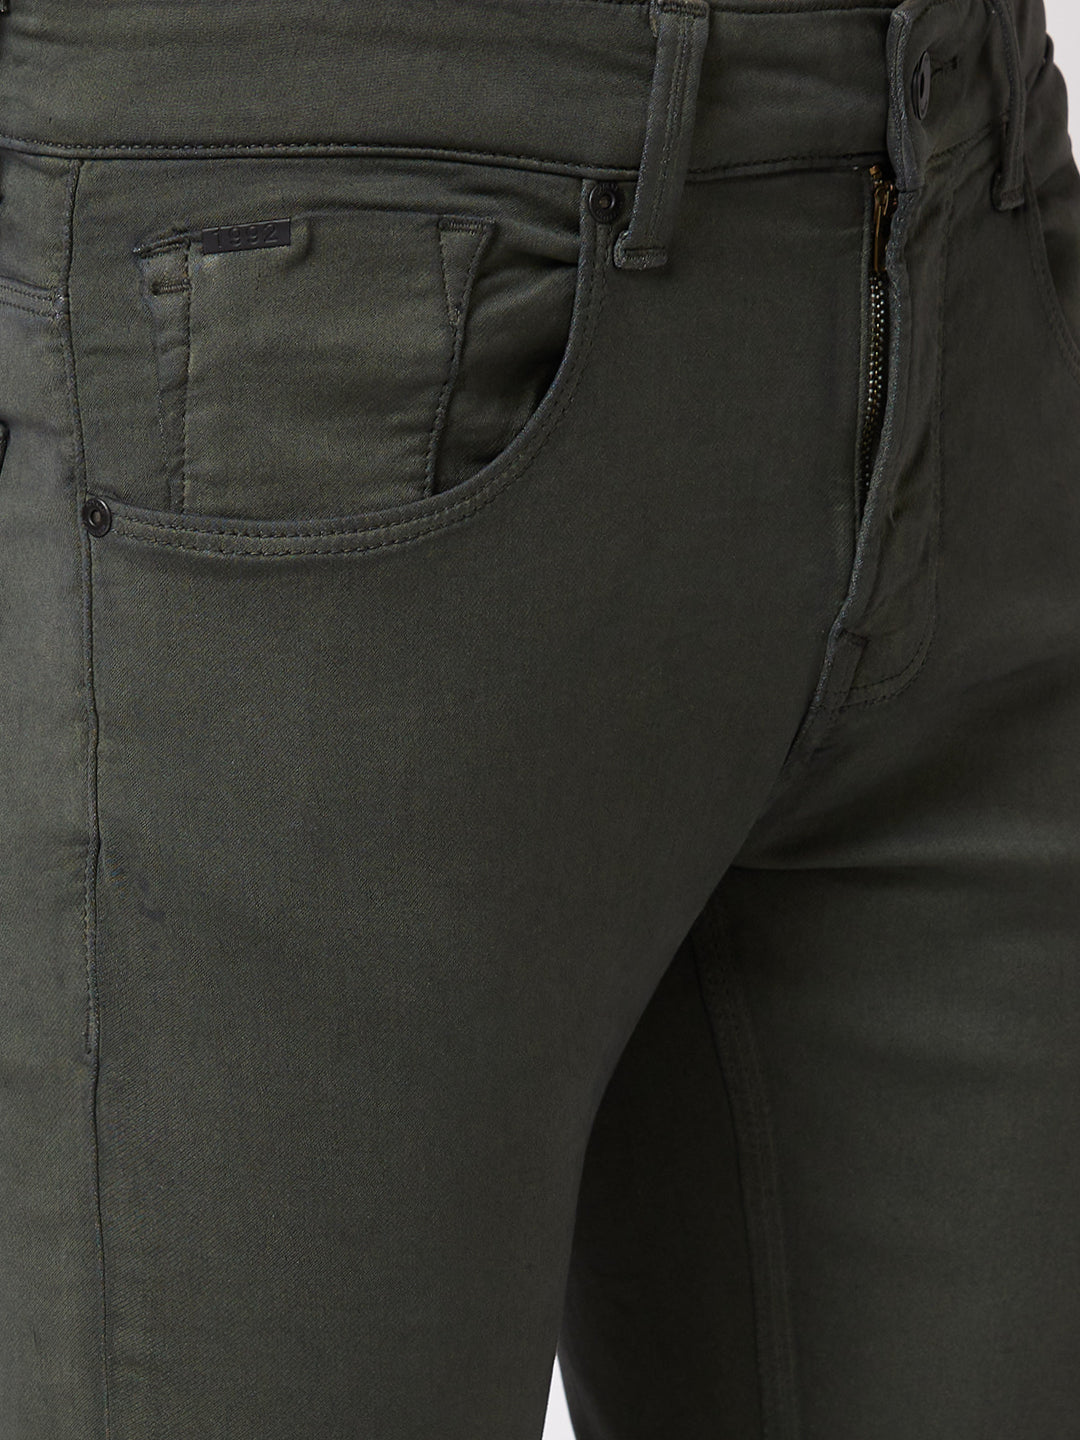 Spykar Low Rise Skinny Fit Green Jeans For Men